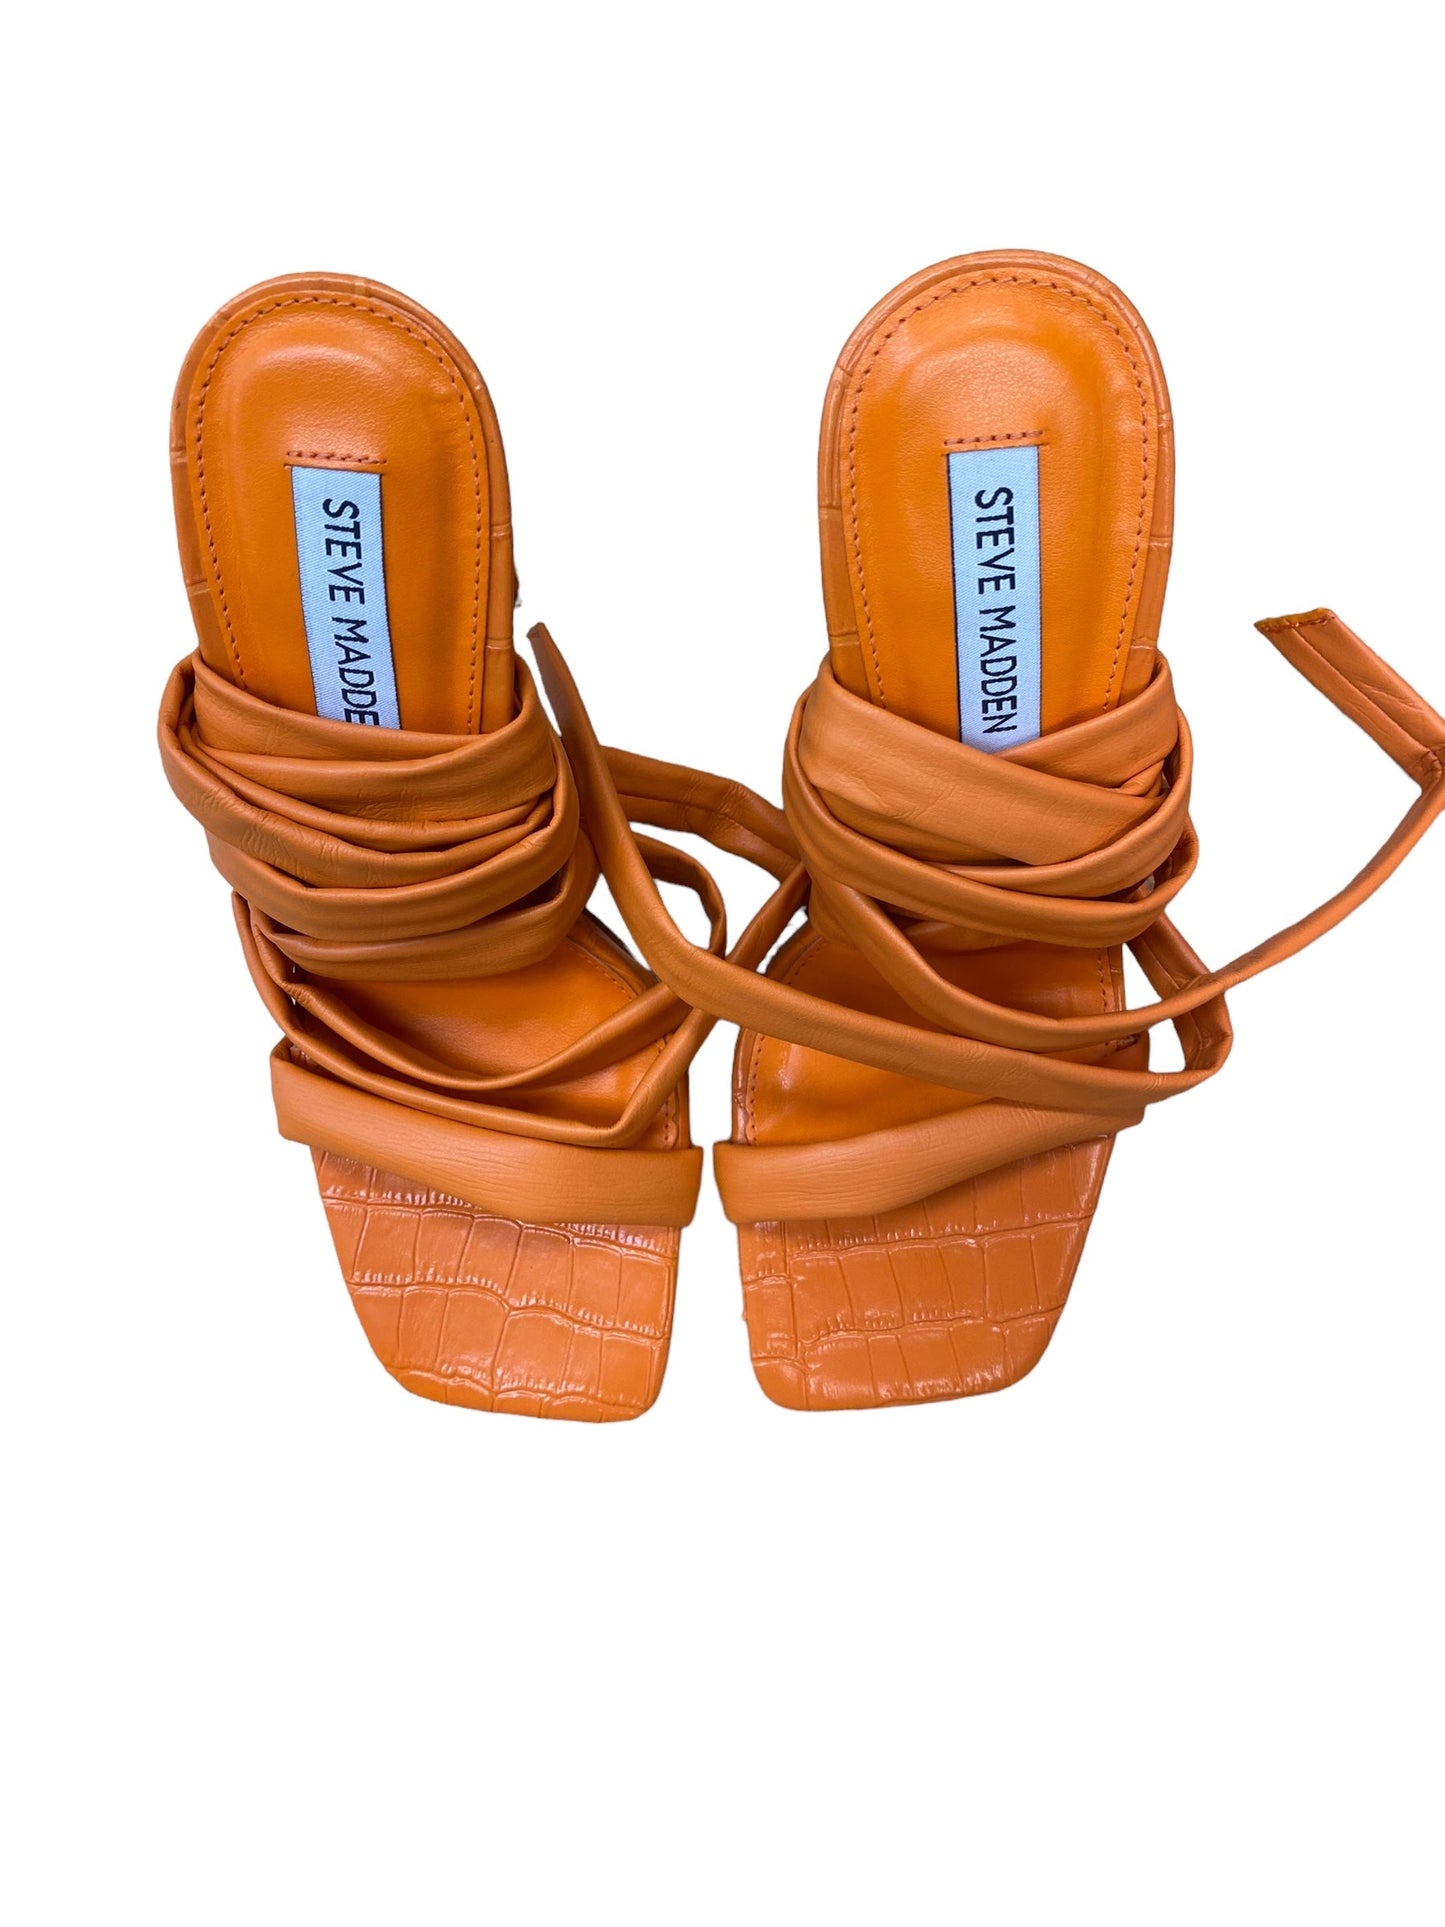 Orange Shoes Heels Stiletto Steve Madden, Size 7